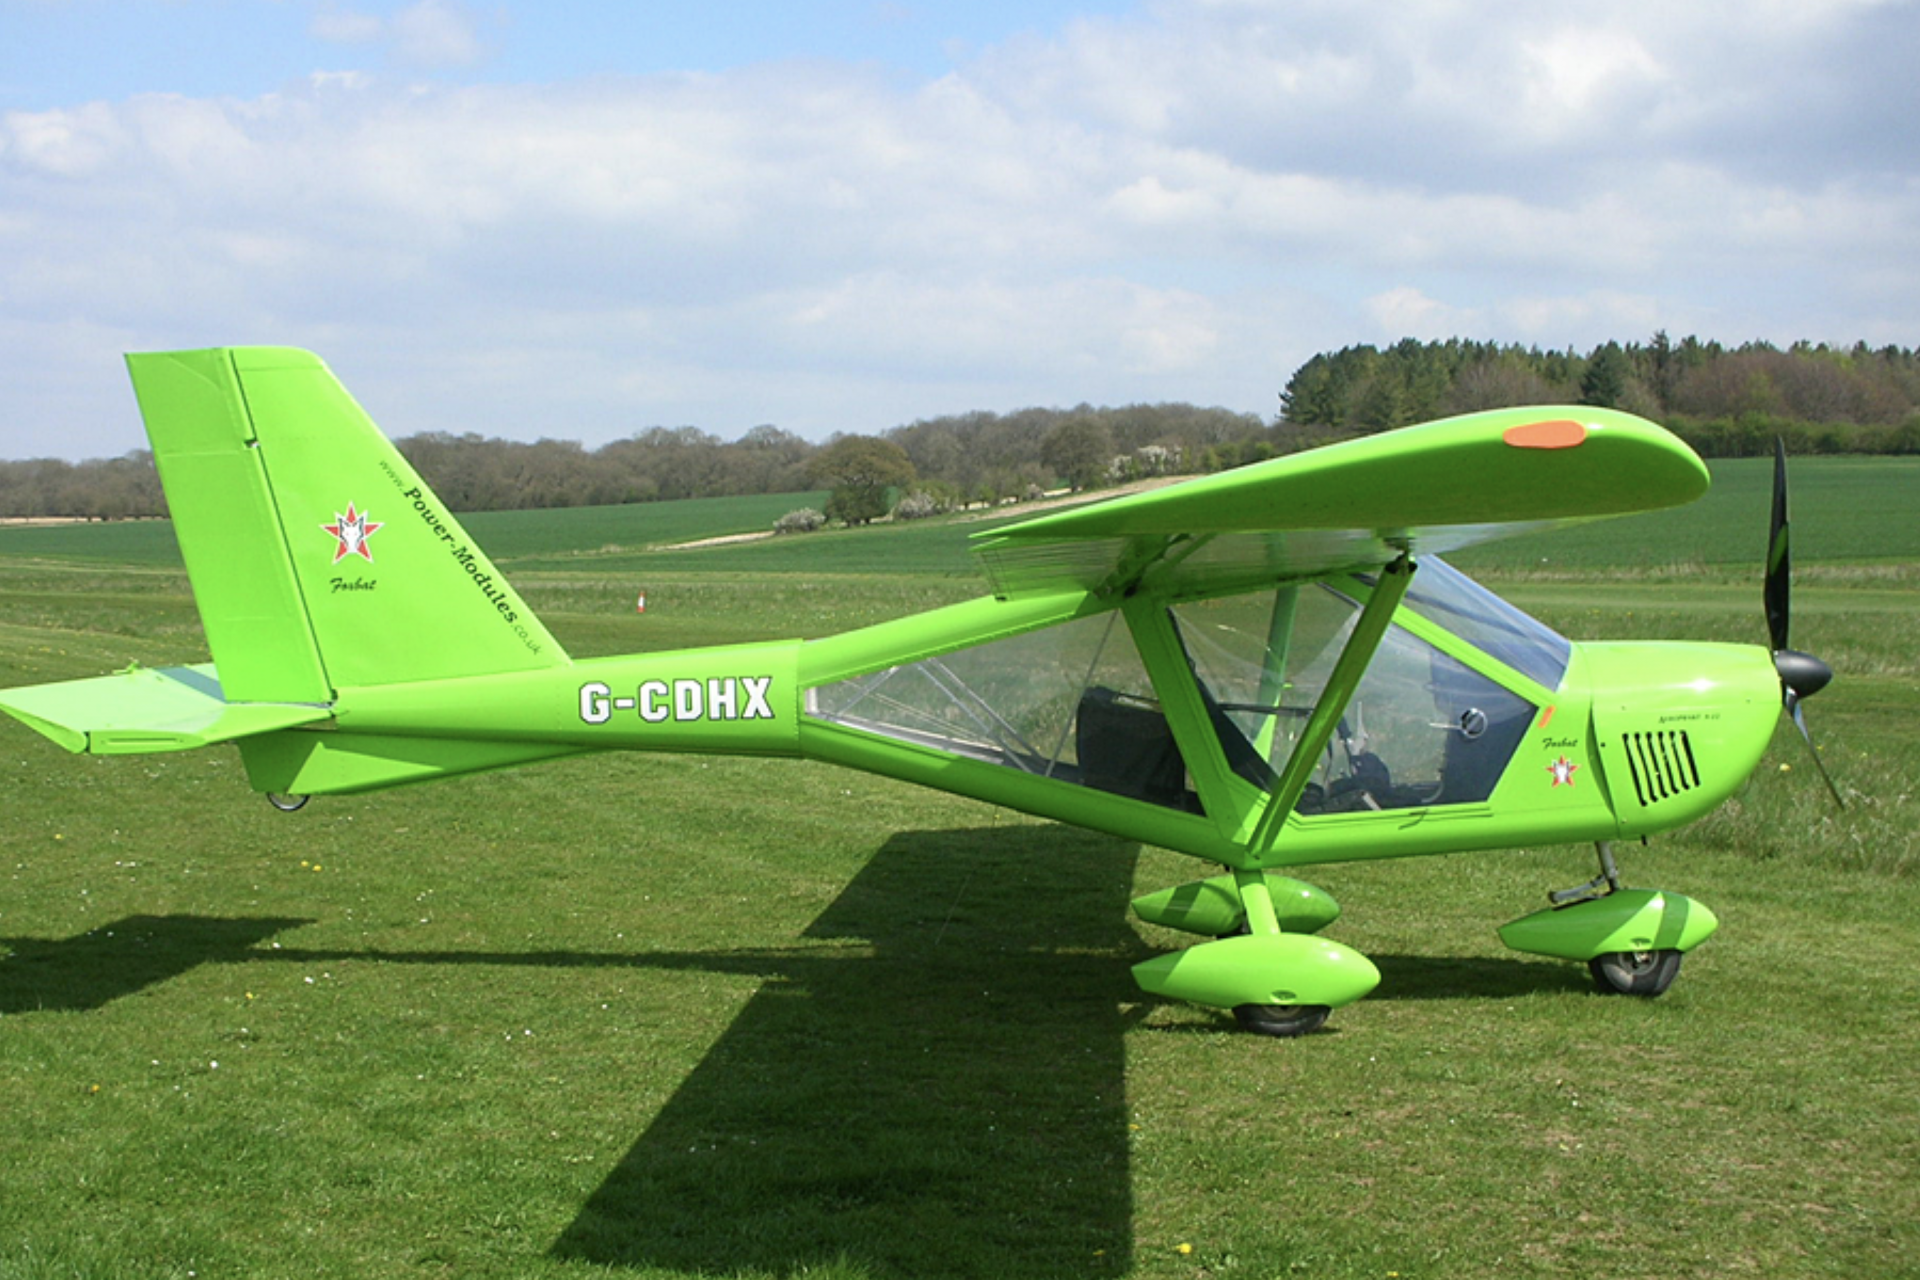 The Aeroprakt A-22